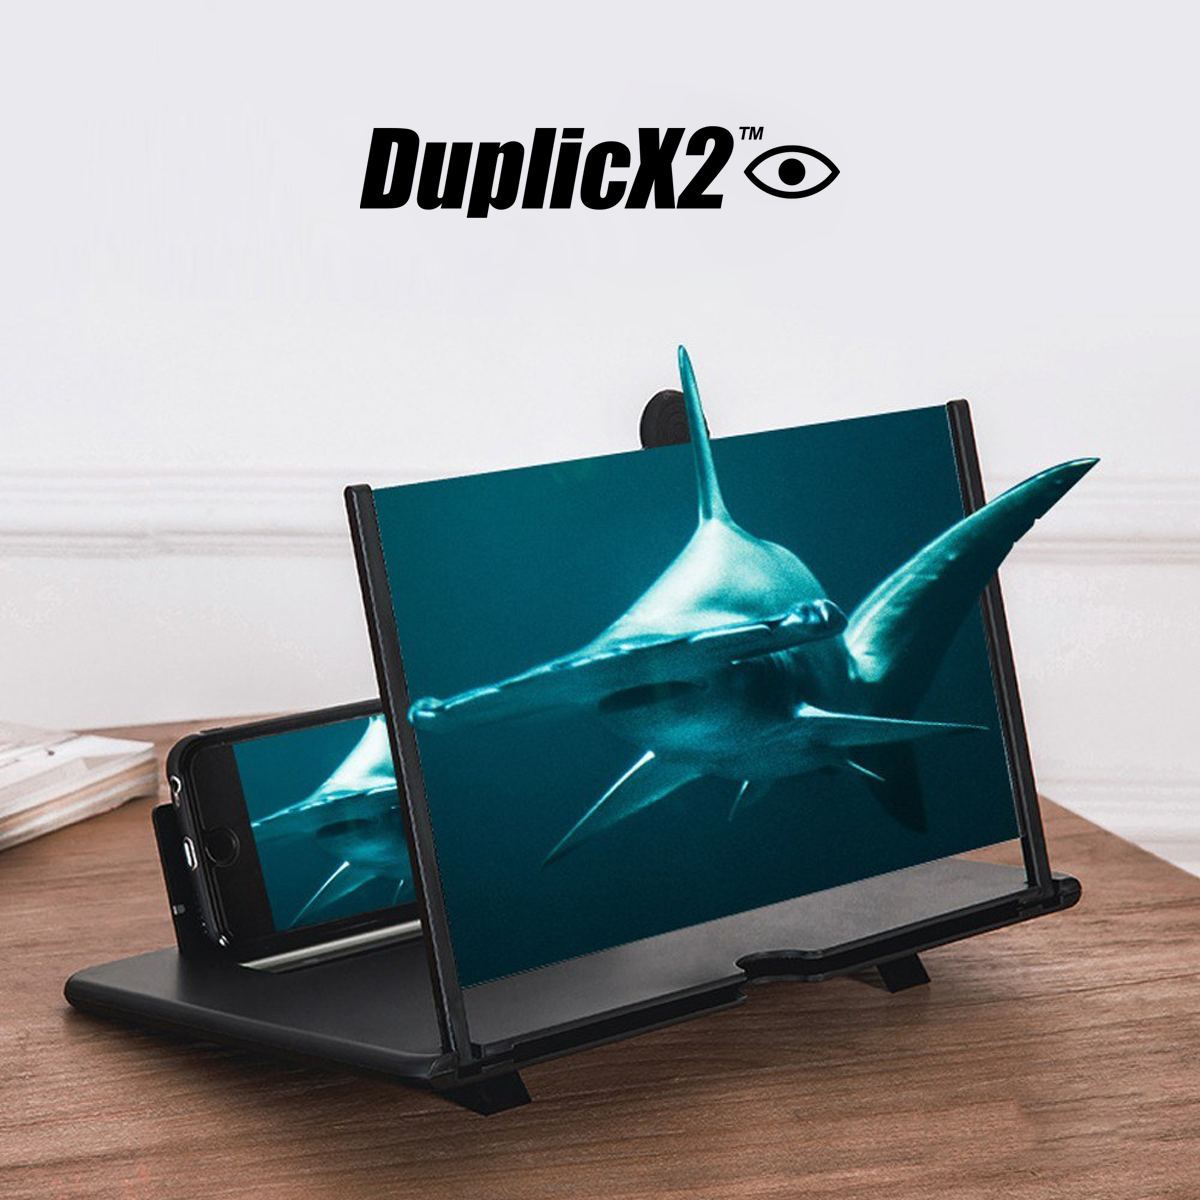 DuplicX2™